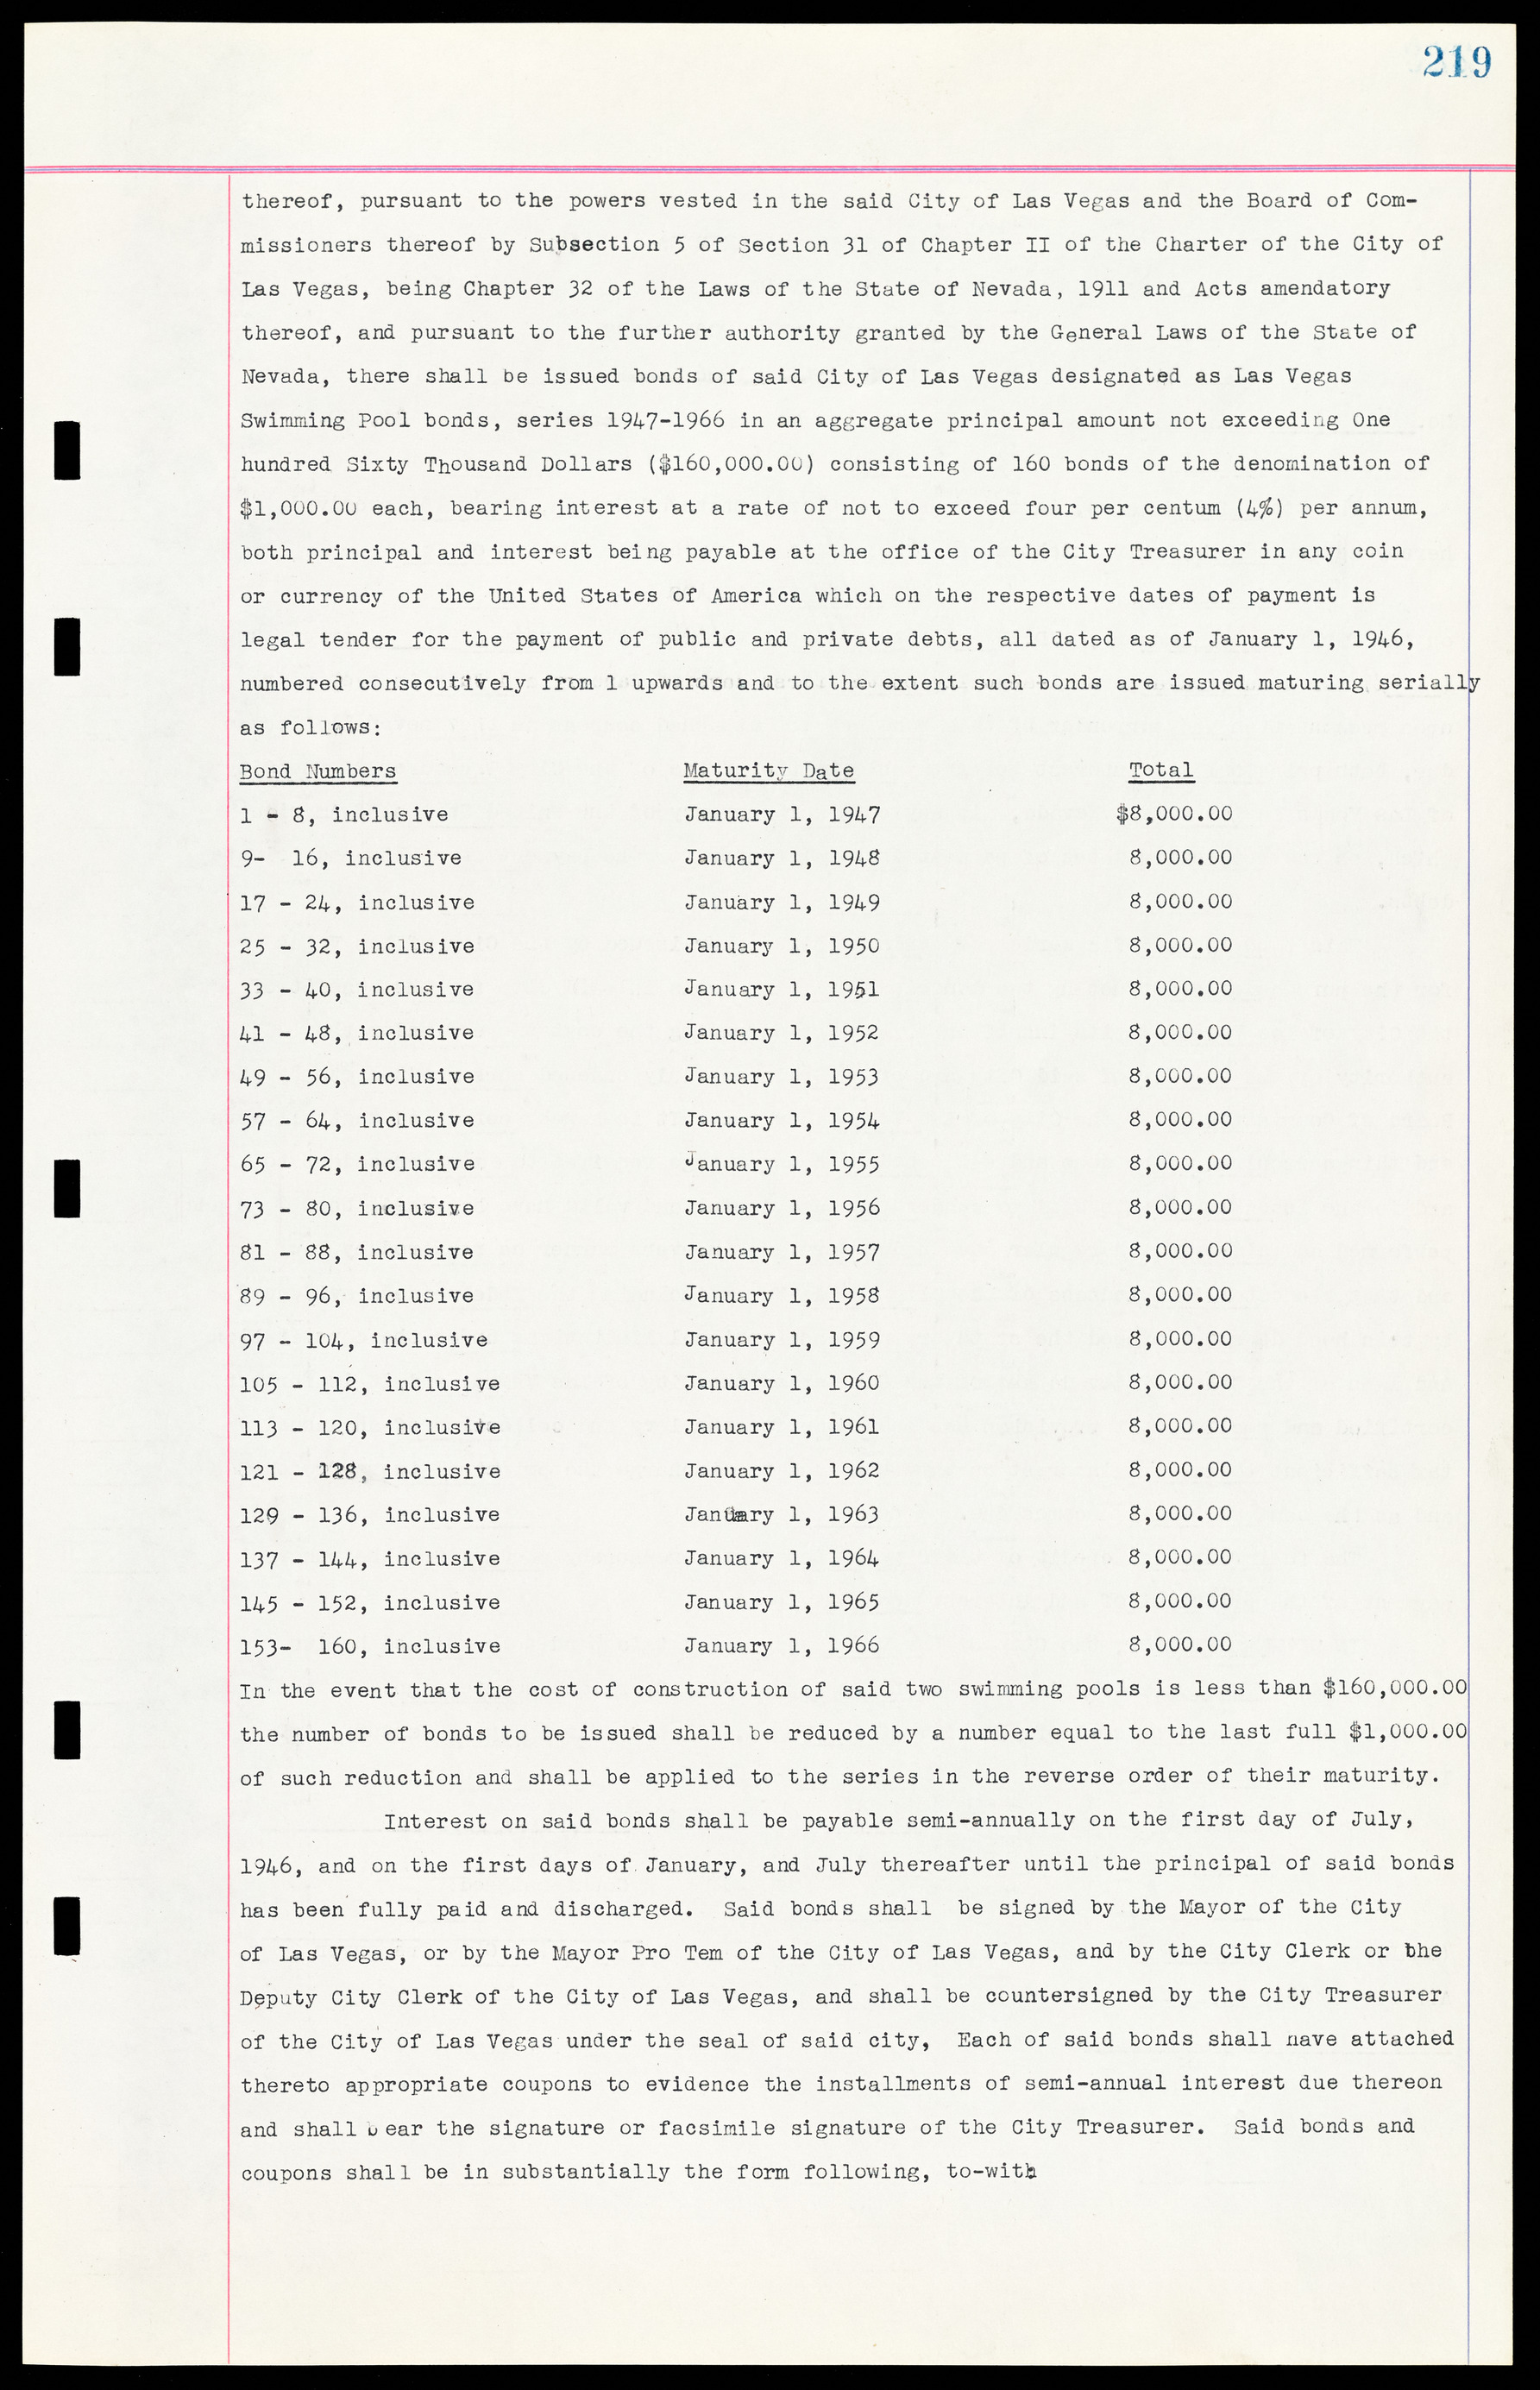 Las Vegas City Ordinances, March 31, 1933 to October 25, 1950, lvc000014-248